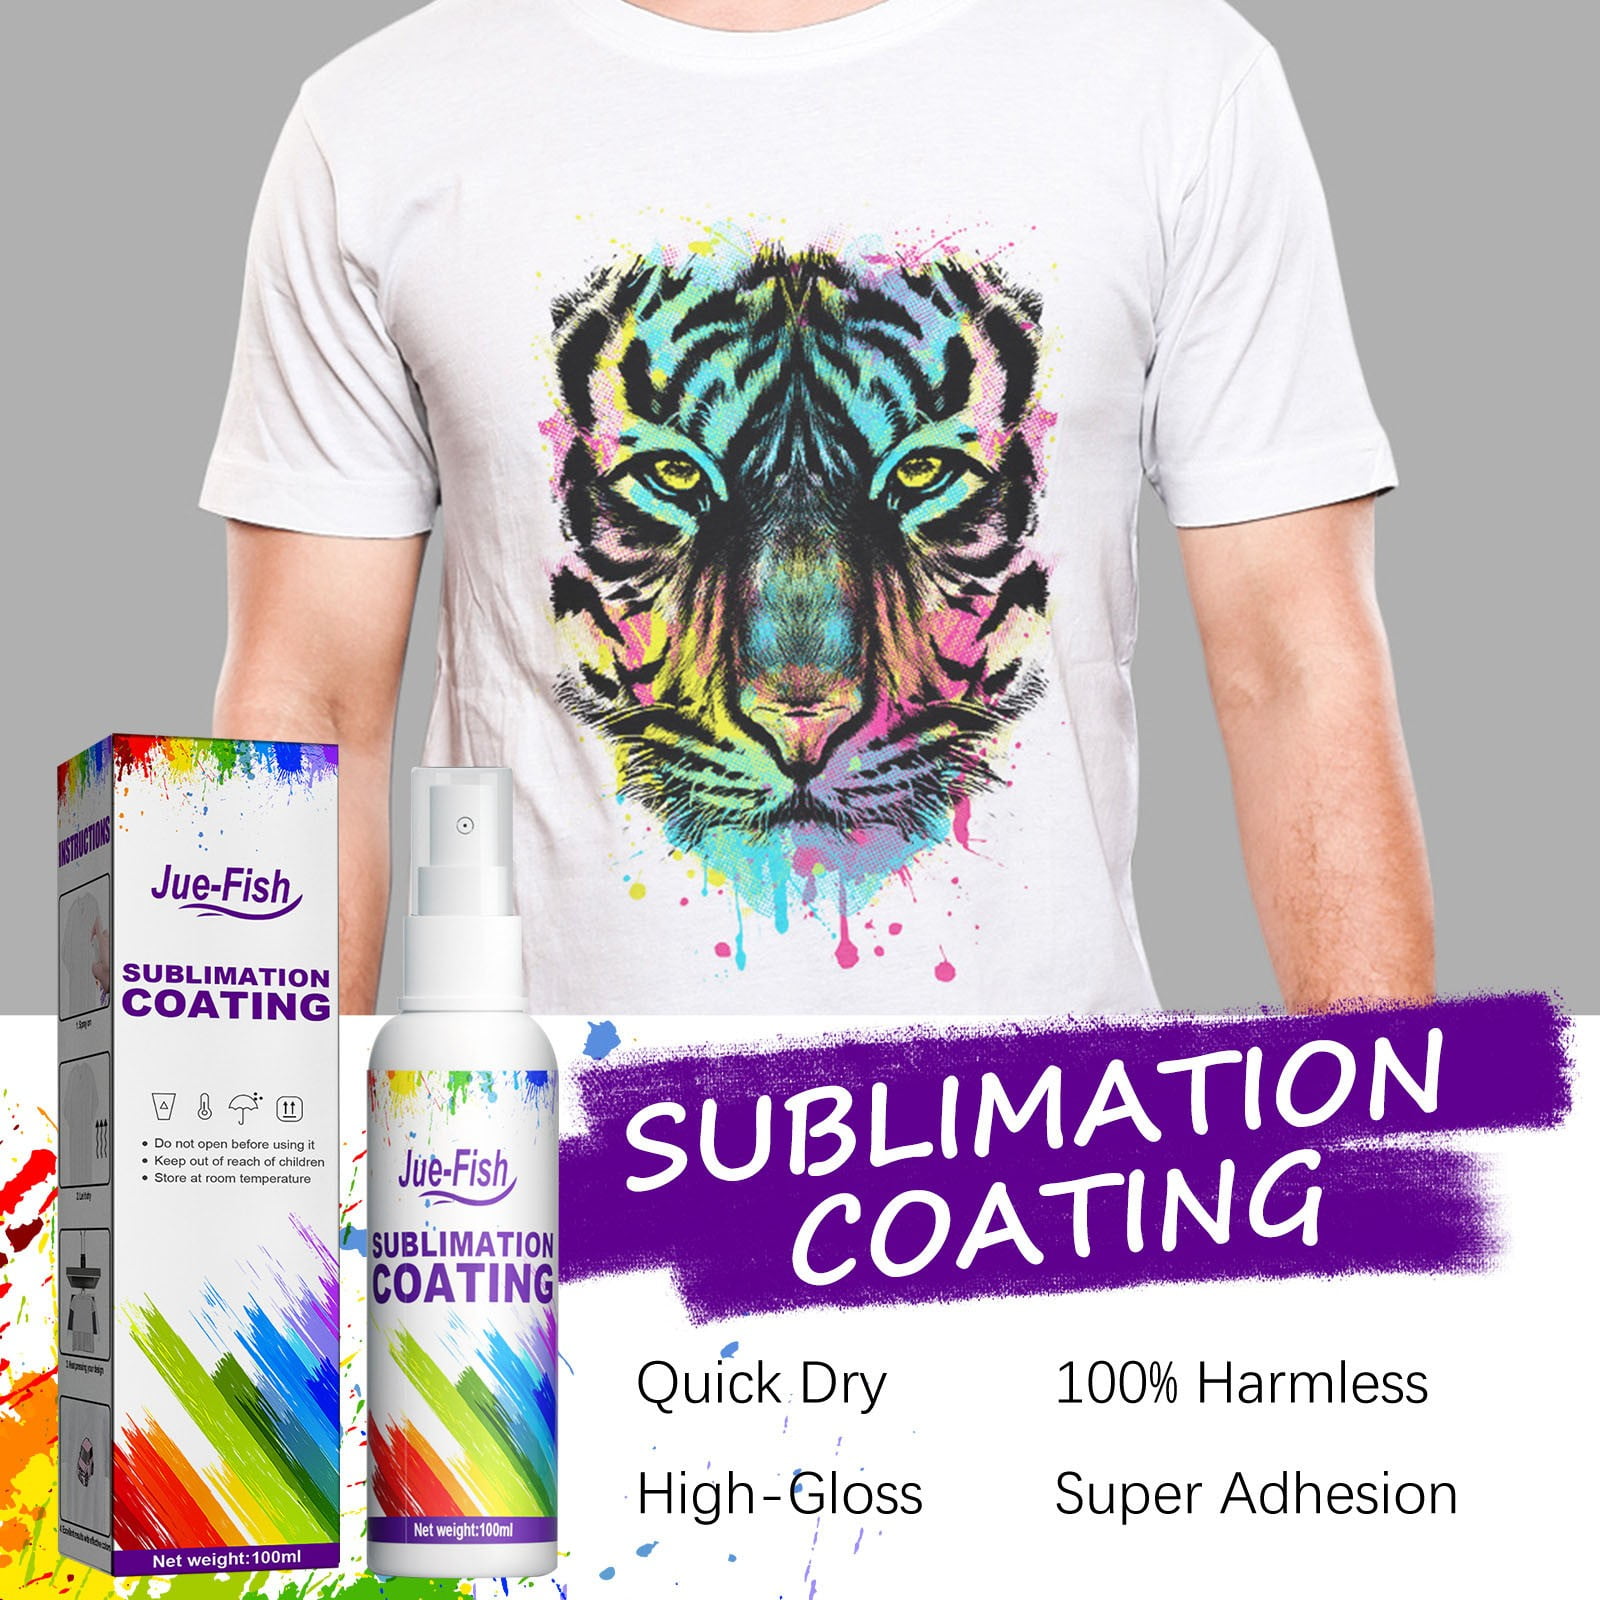 Pjtewawe Spray Bottles 100ML Sublimation Coating Spray Clothing Thermal ...